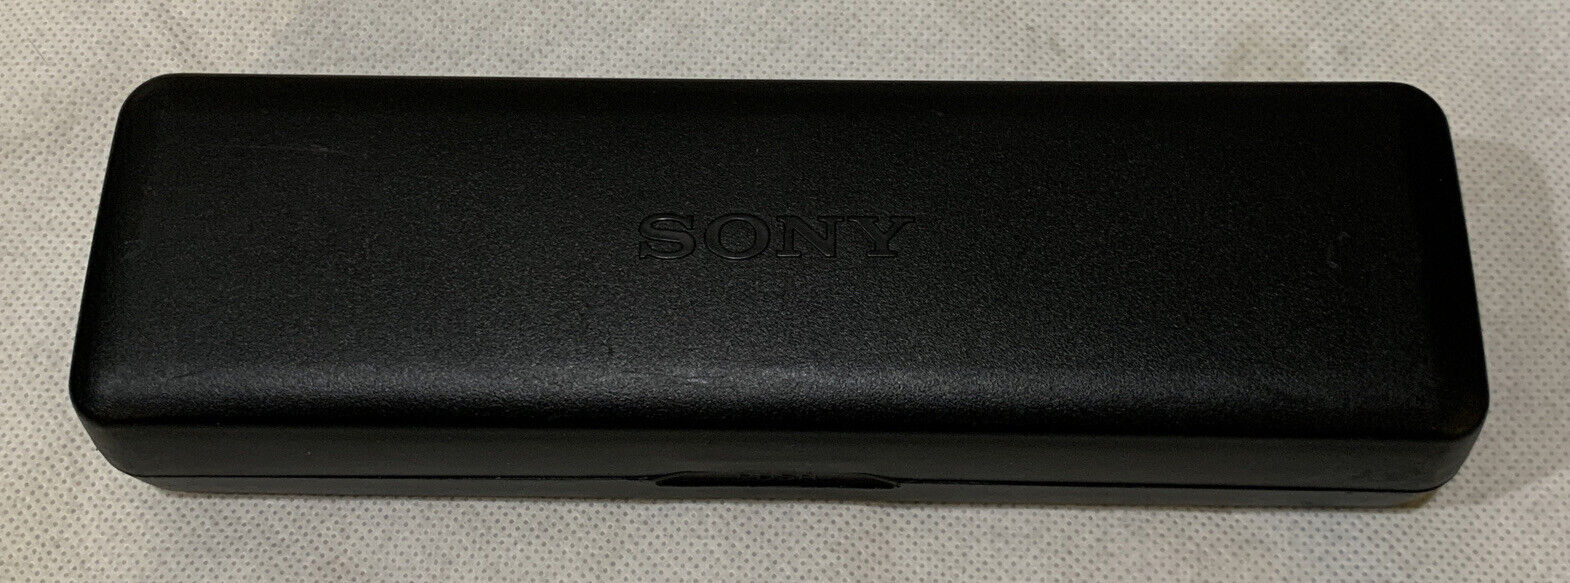 Sony Cdx-r30m  Marine Mp3 Playback Car Stereo Detachable Faceplate  Sony Oem